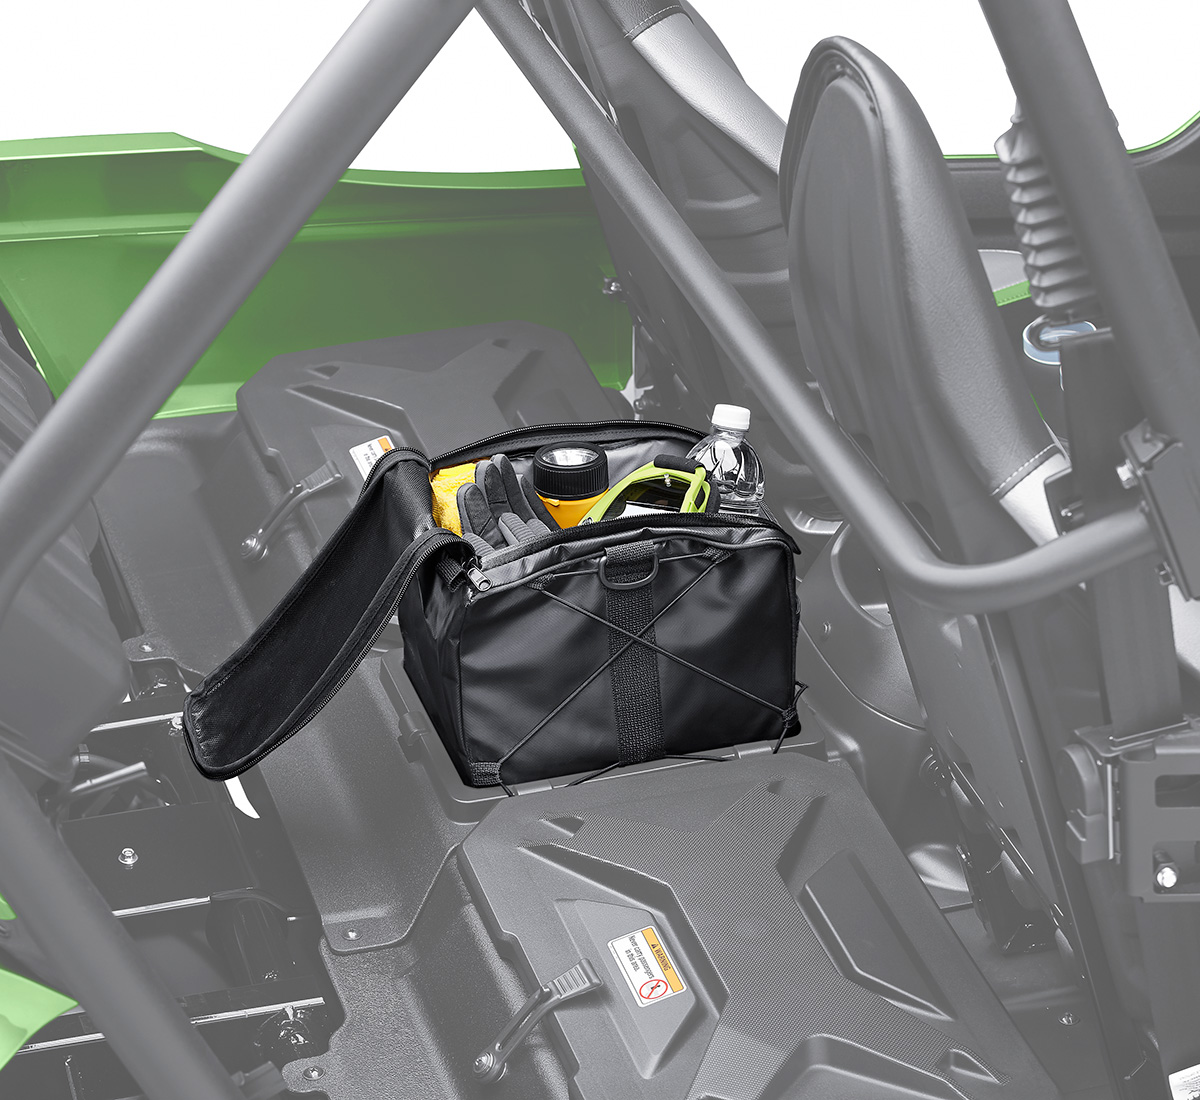 Teryx® Cargo Bag | Kawasaki Motors Corp., U.S.A.